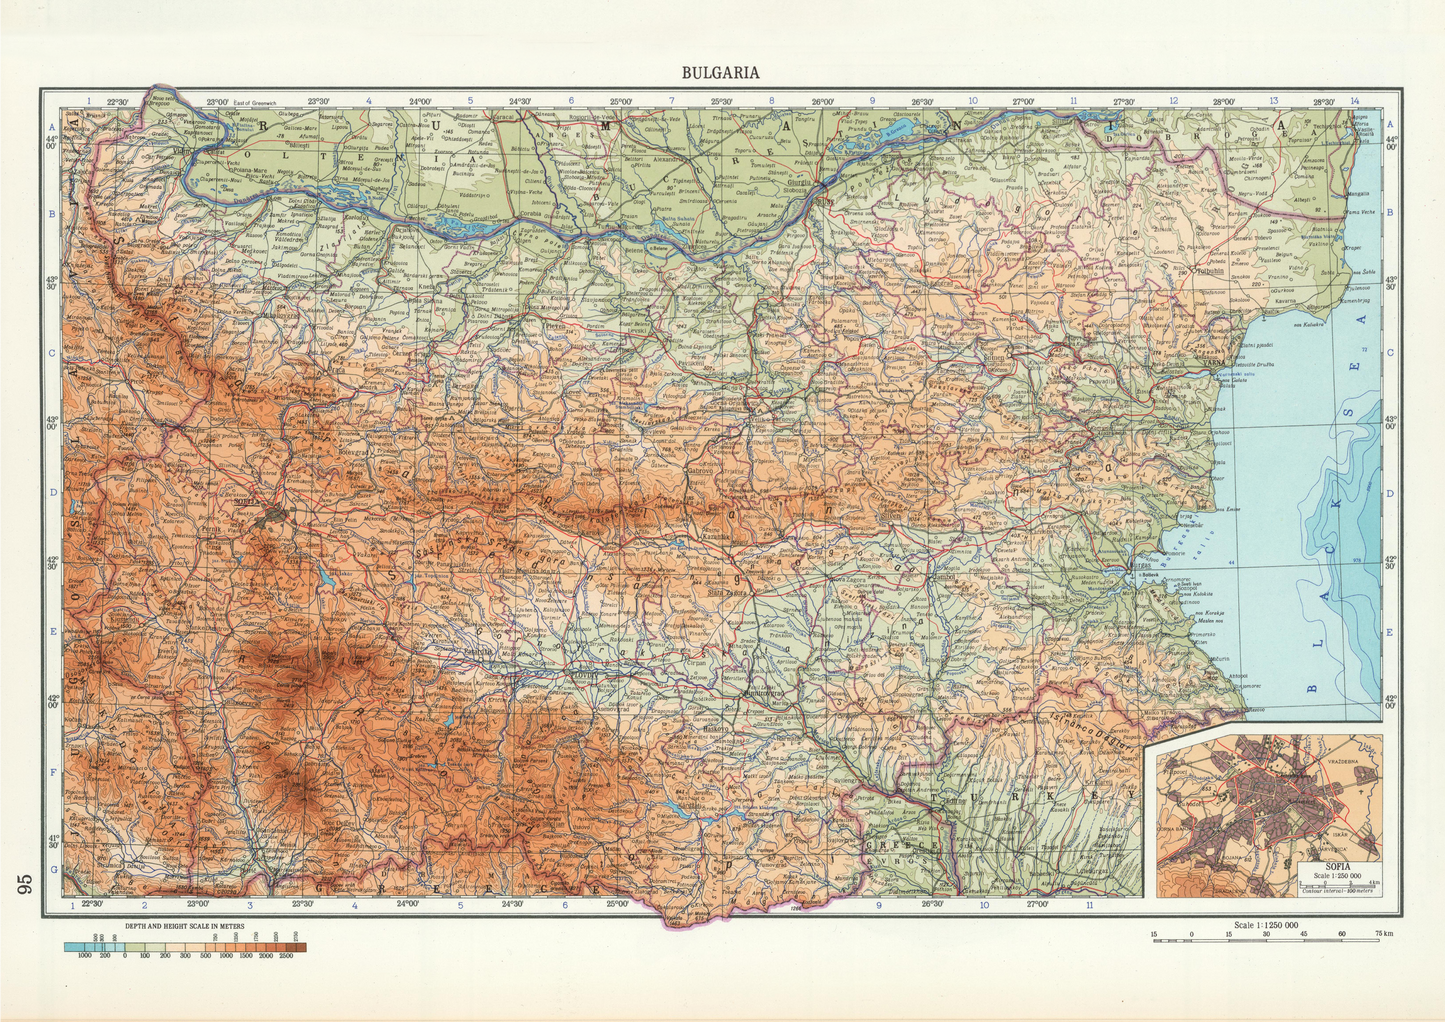 Map of Bulgaria in 1970